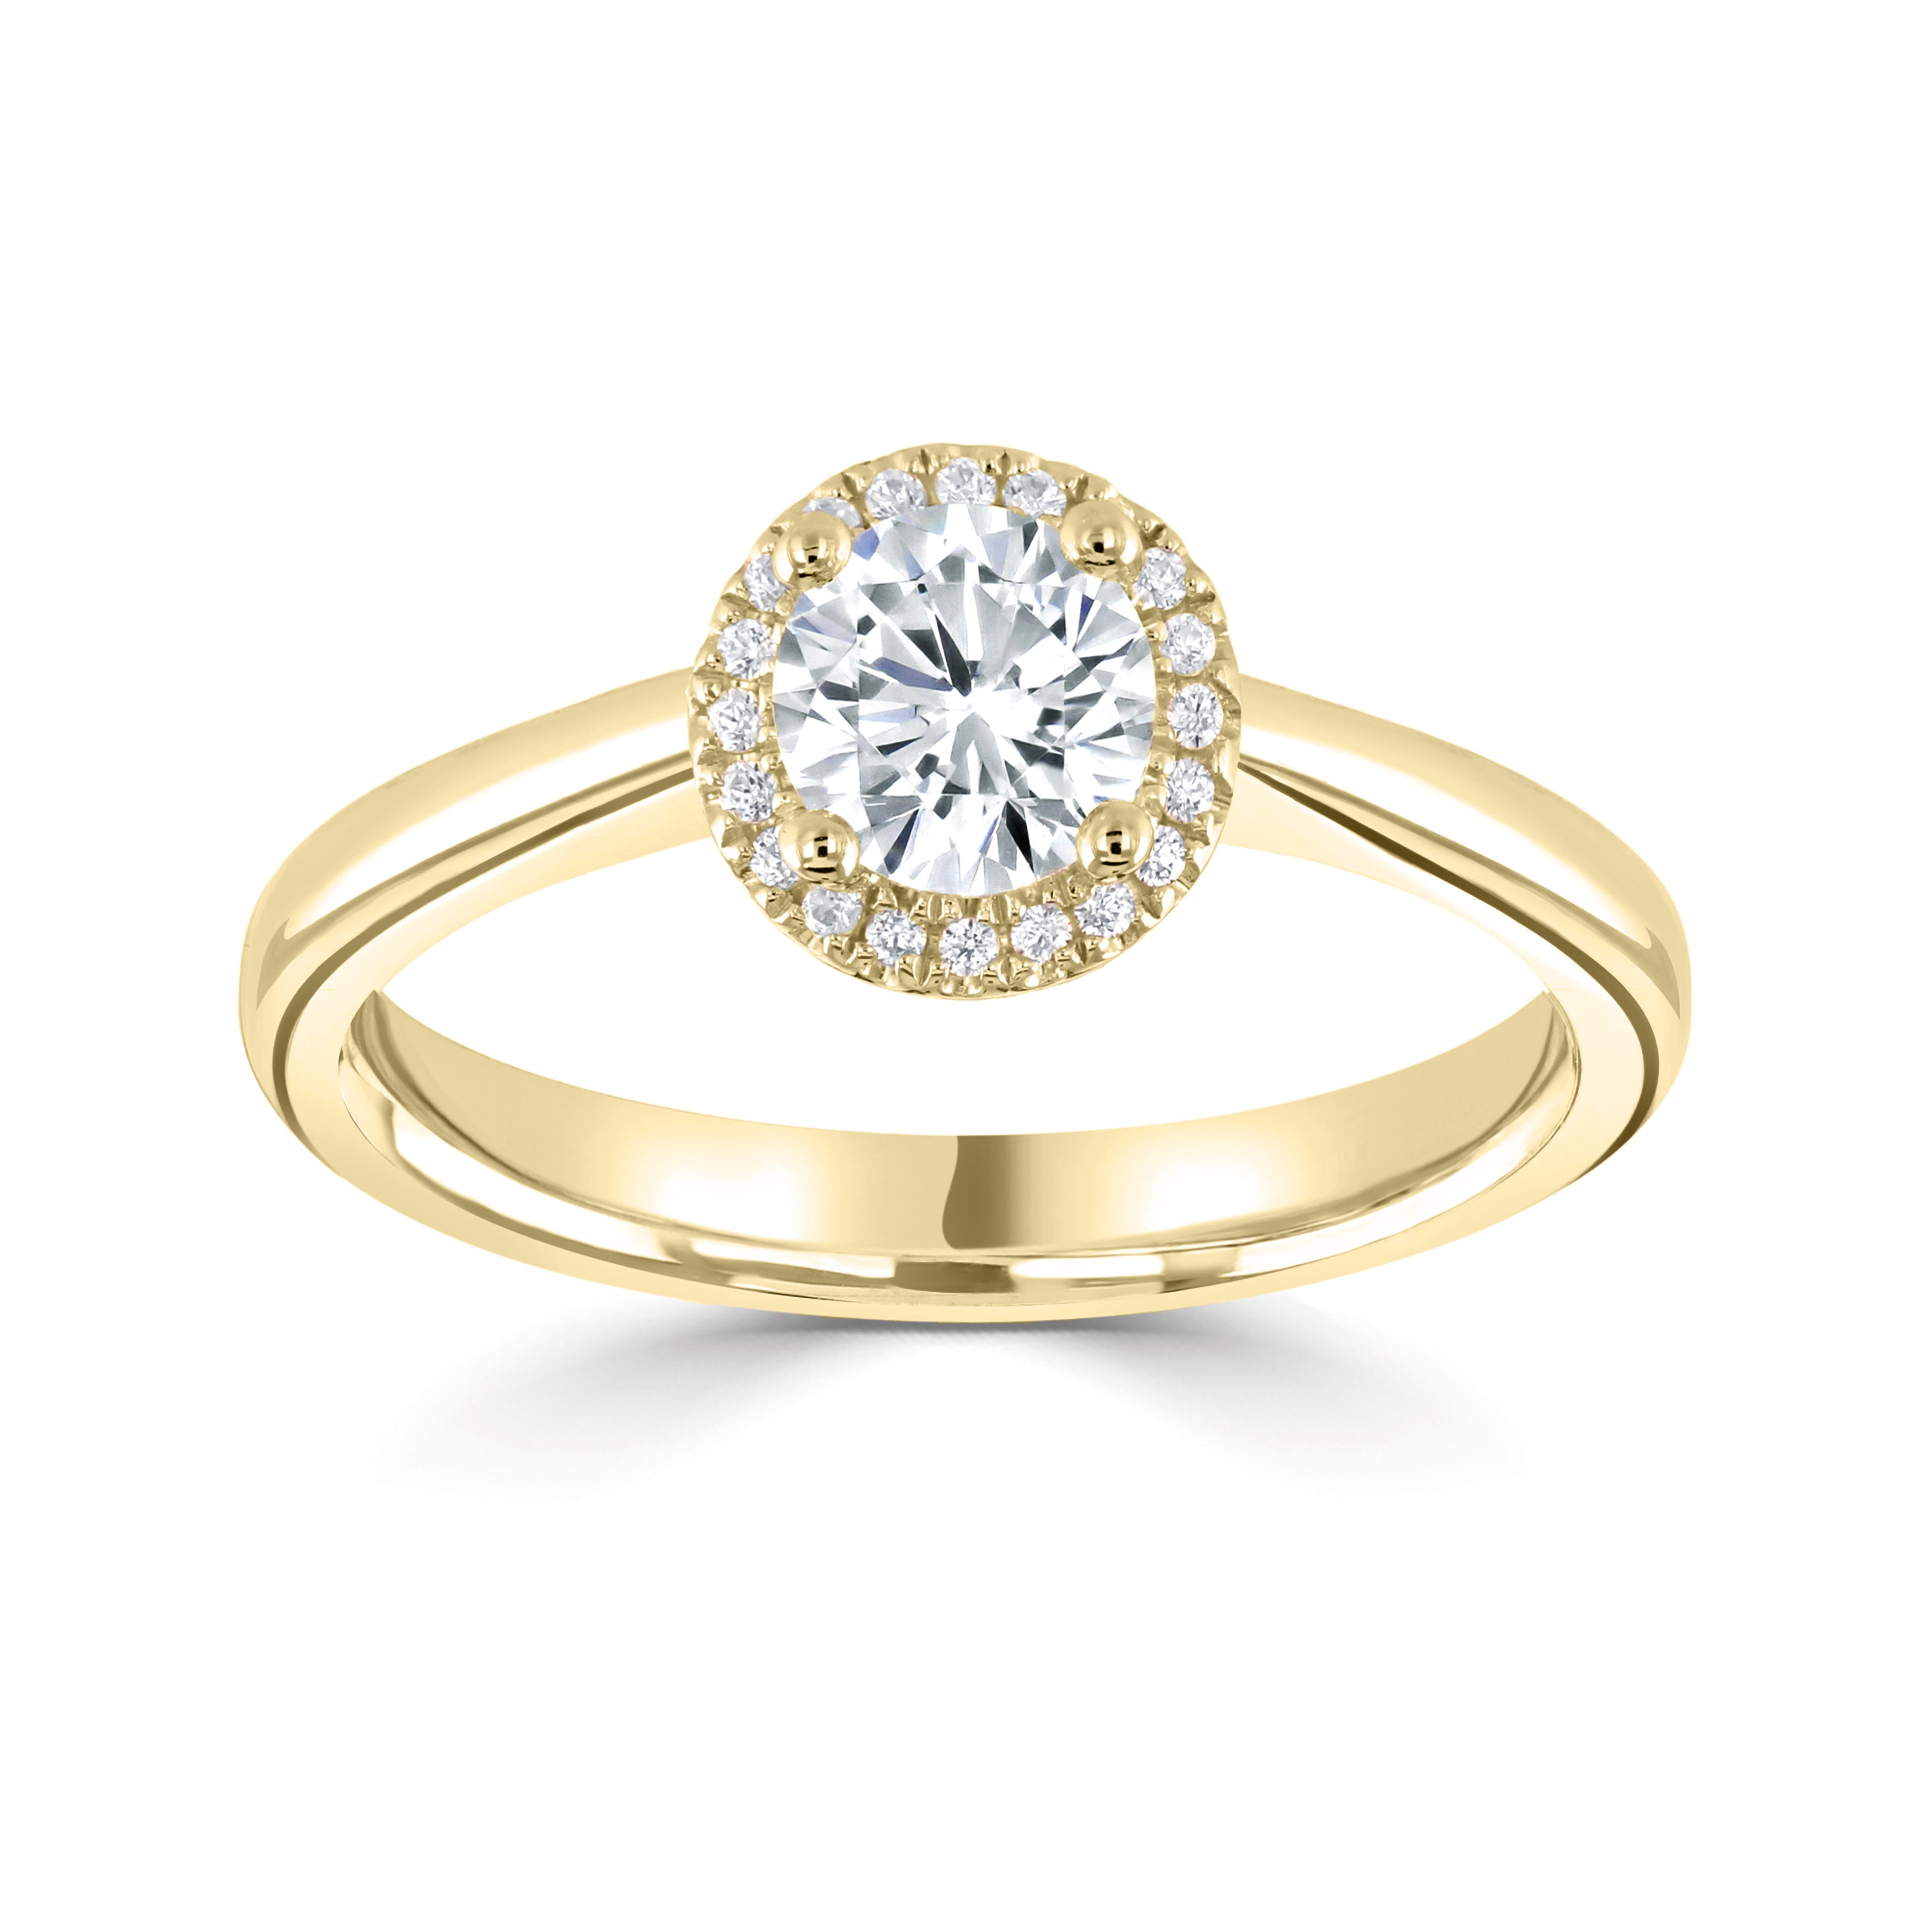 18CT Yellow Gold Round Diamond Halo Ring